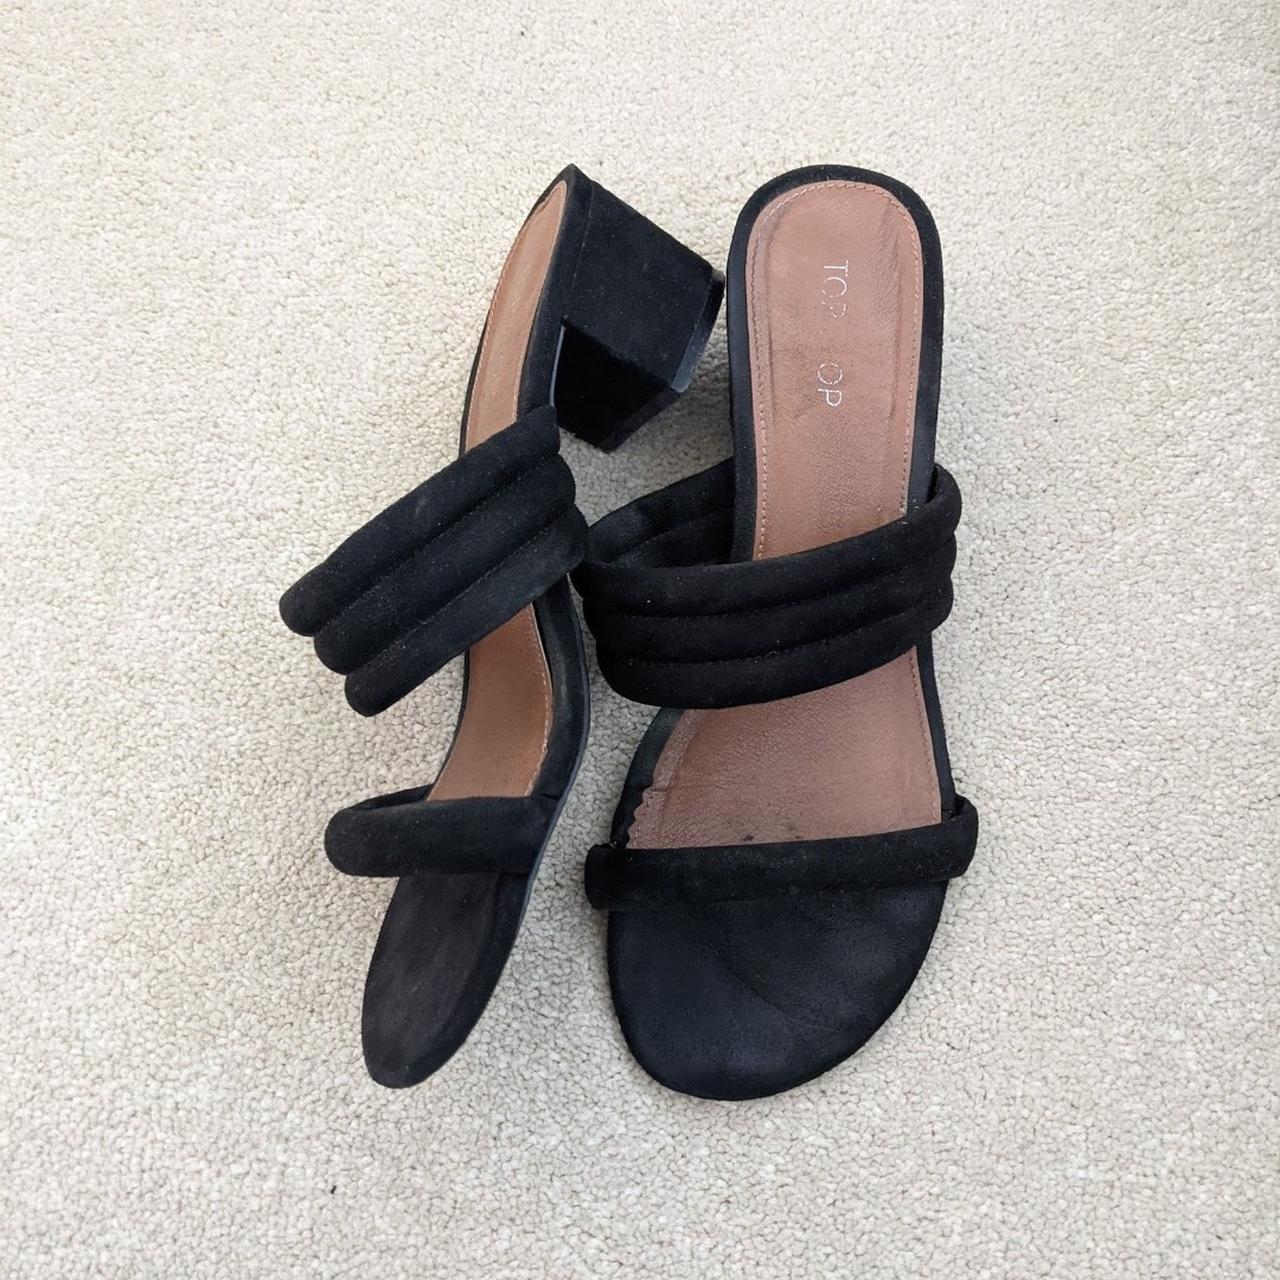 Topshop sandals Topshop heels Topshop black... - Depop